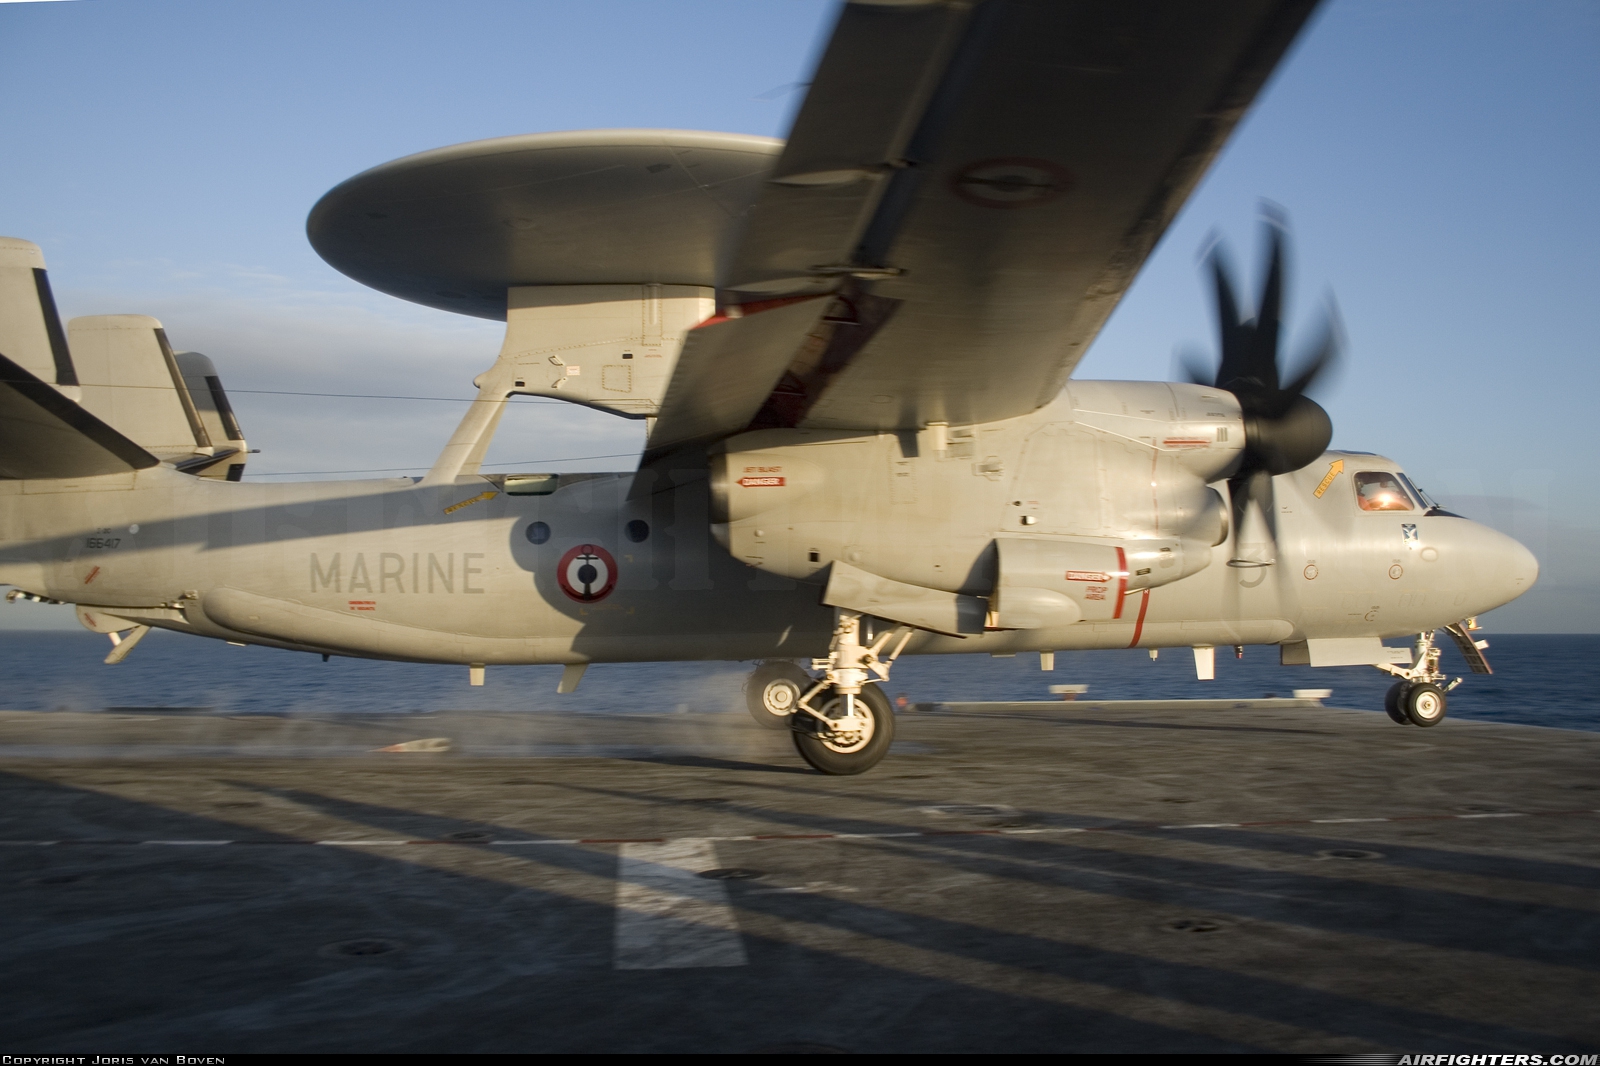 France - Navy Grumman E-2C II Hawkeye 3 at Off-Airport - Mediterranean Sea, International Airspace